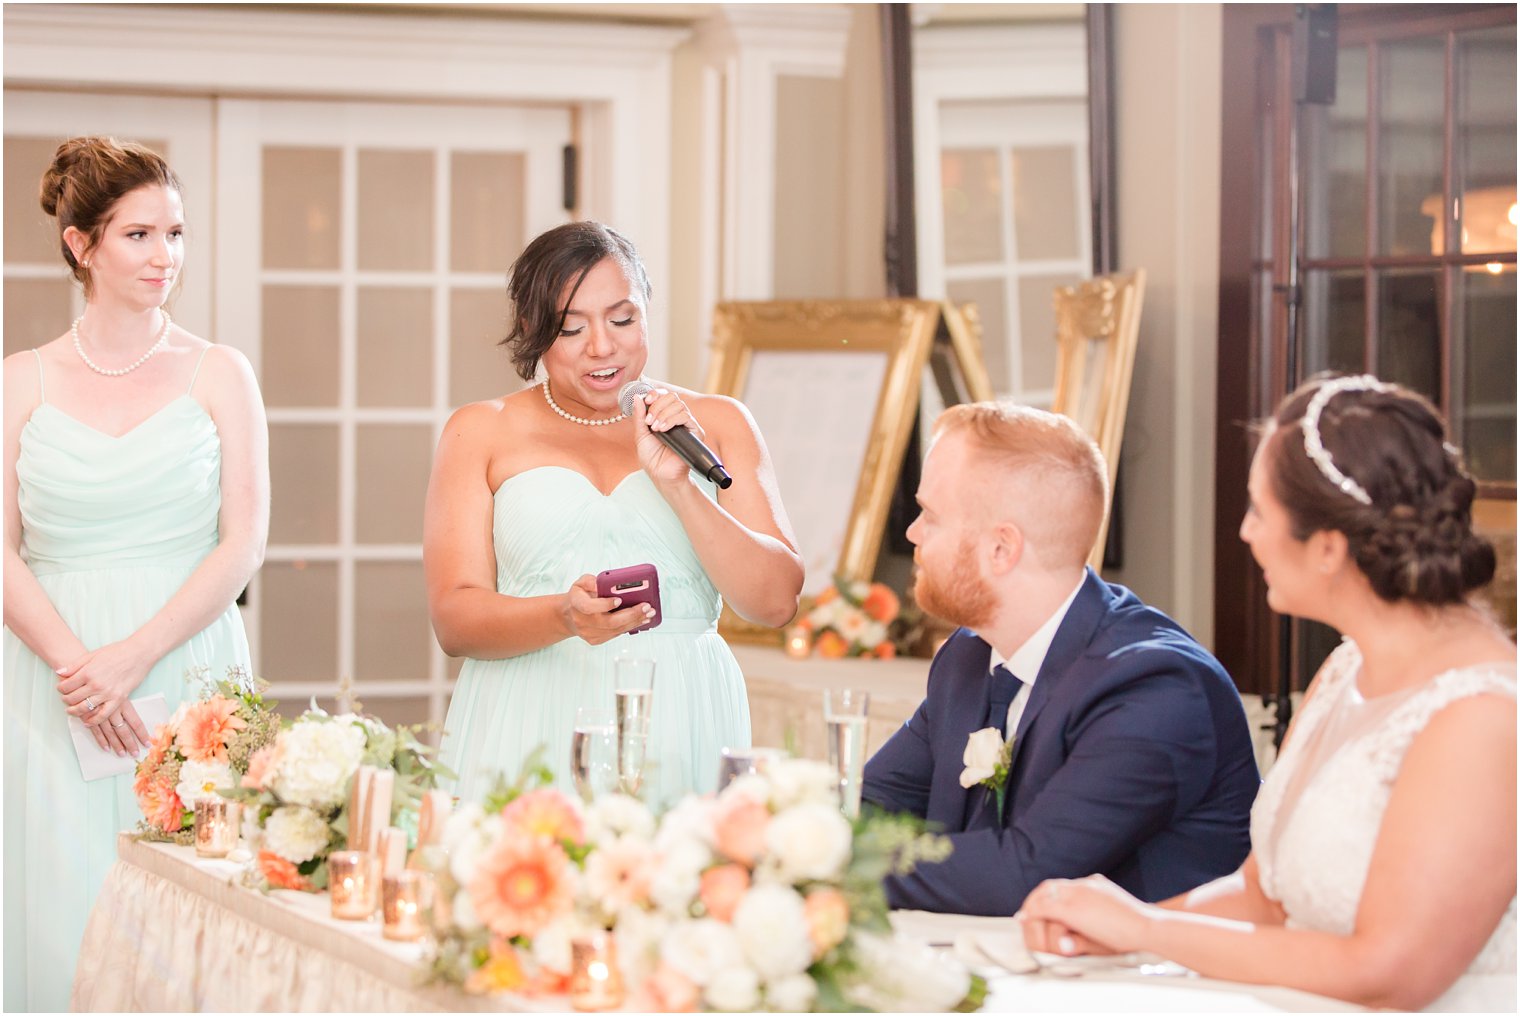 wedding toasts at Lake Mohawk Country Club photographed by Idalia Photography